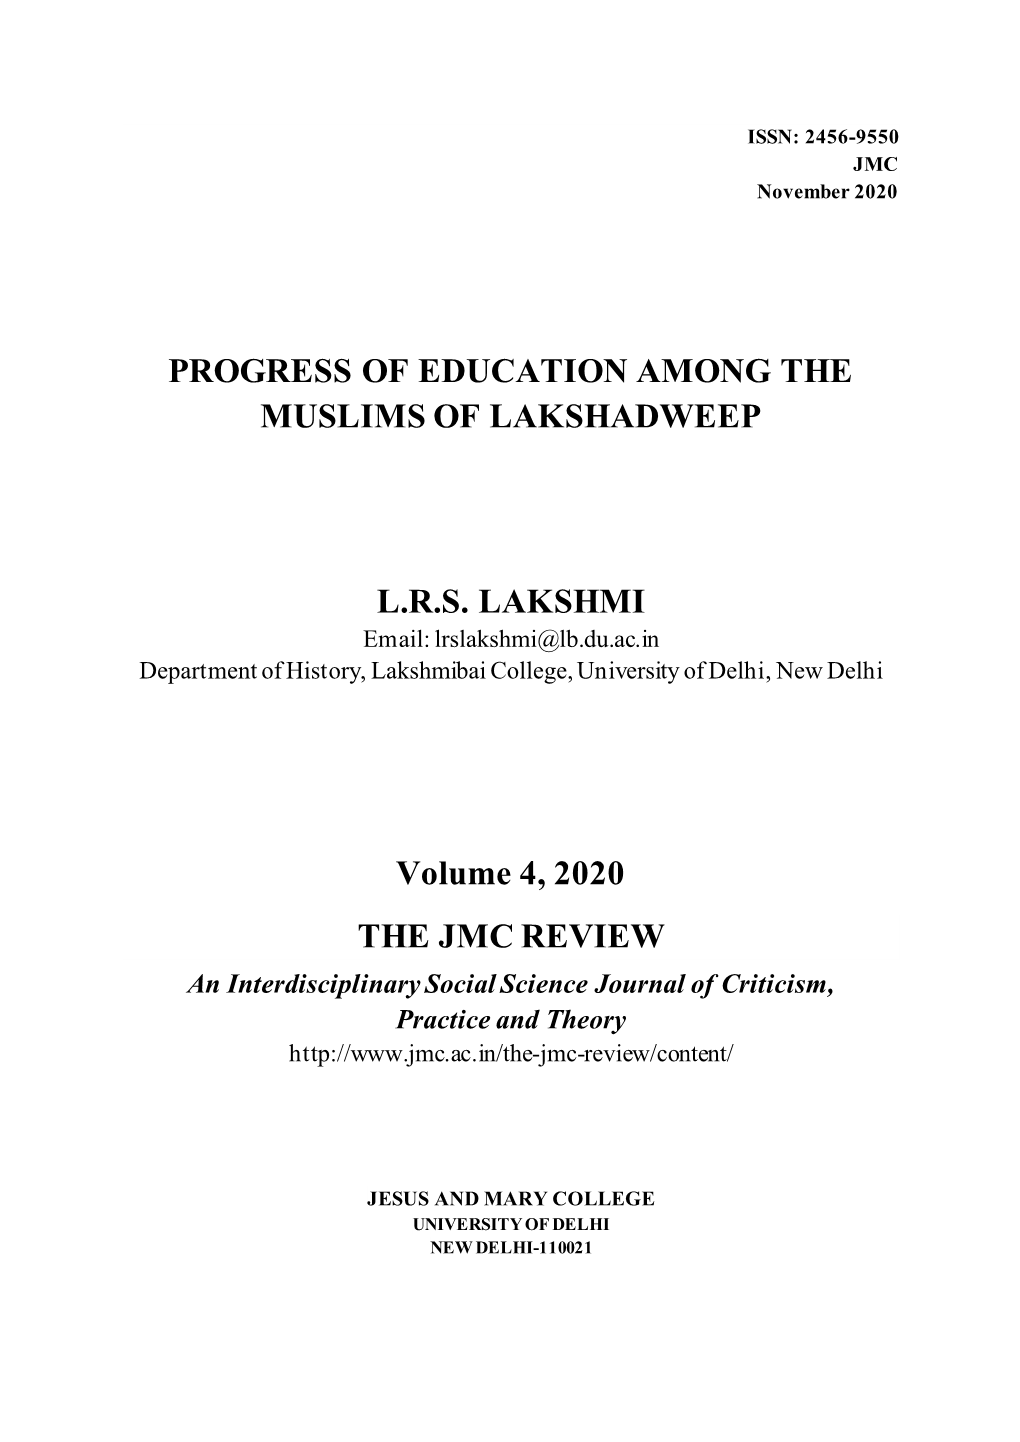 Progress of Education Among the Muslims of Lakshadweep